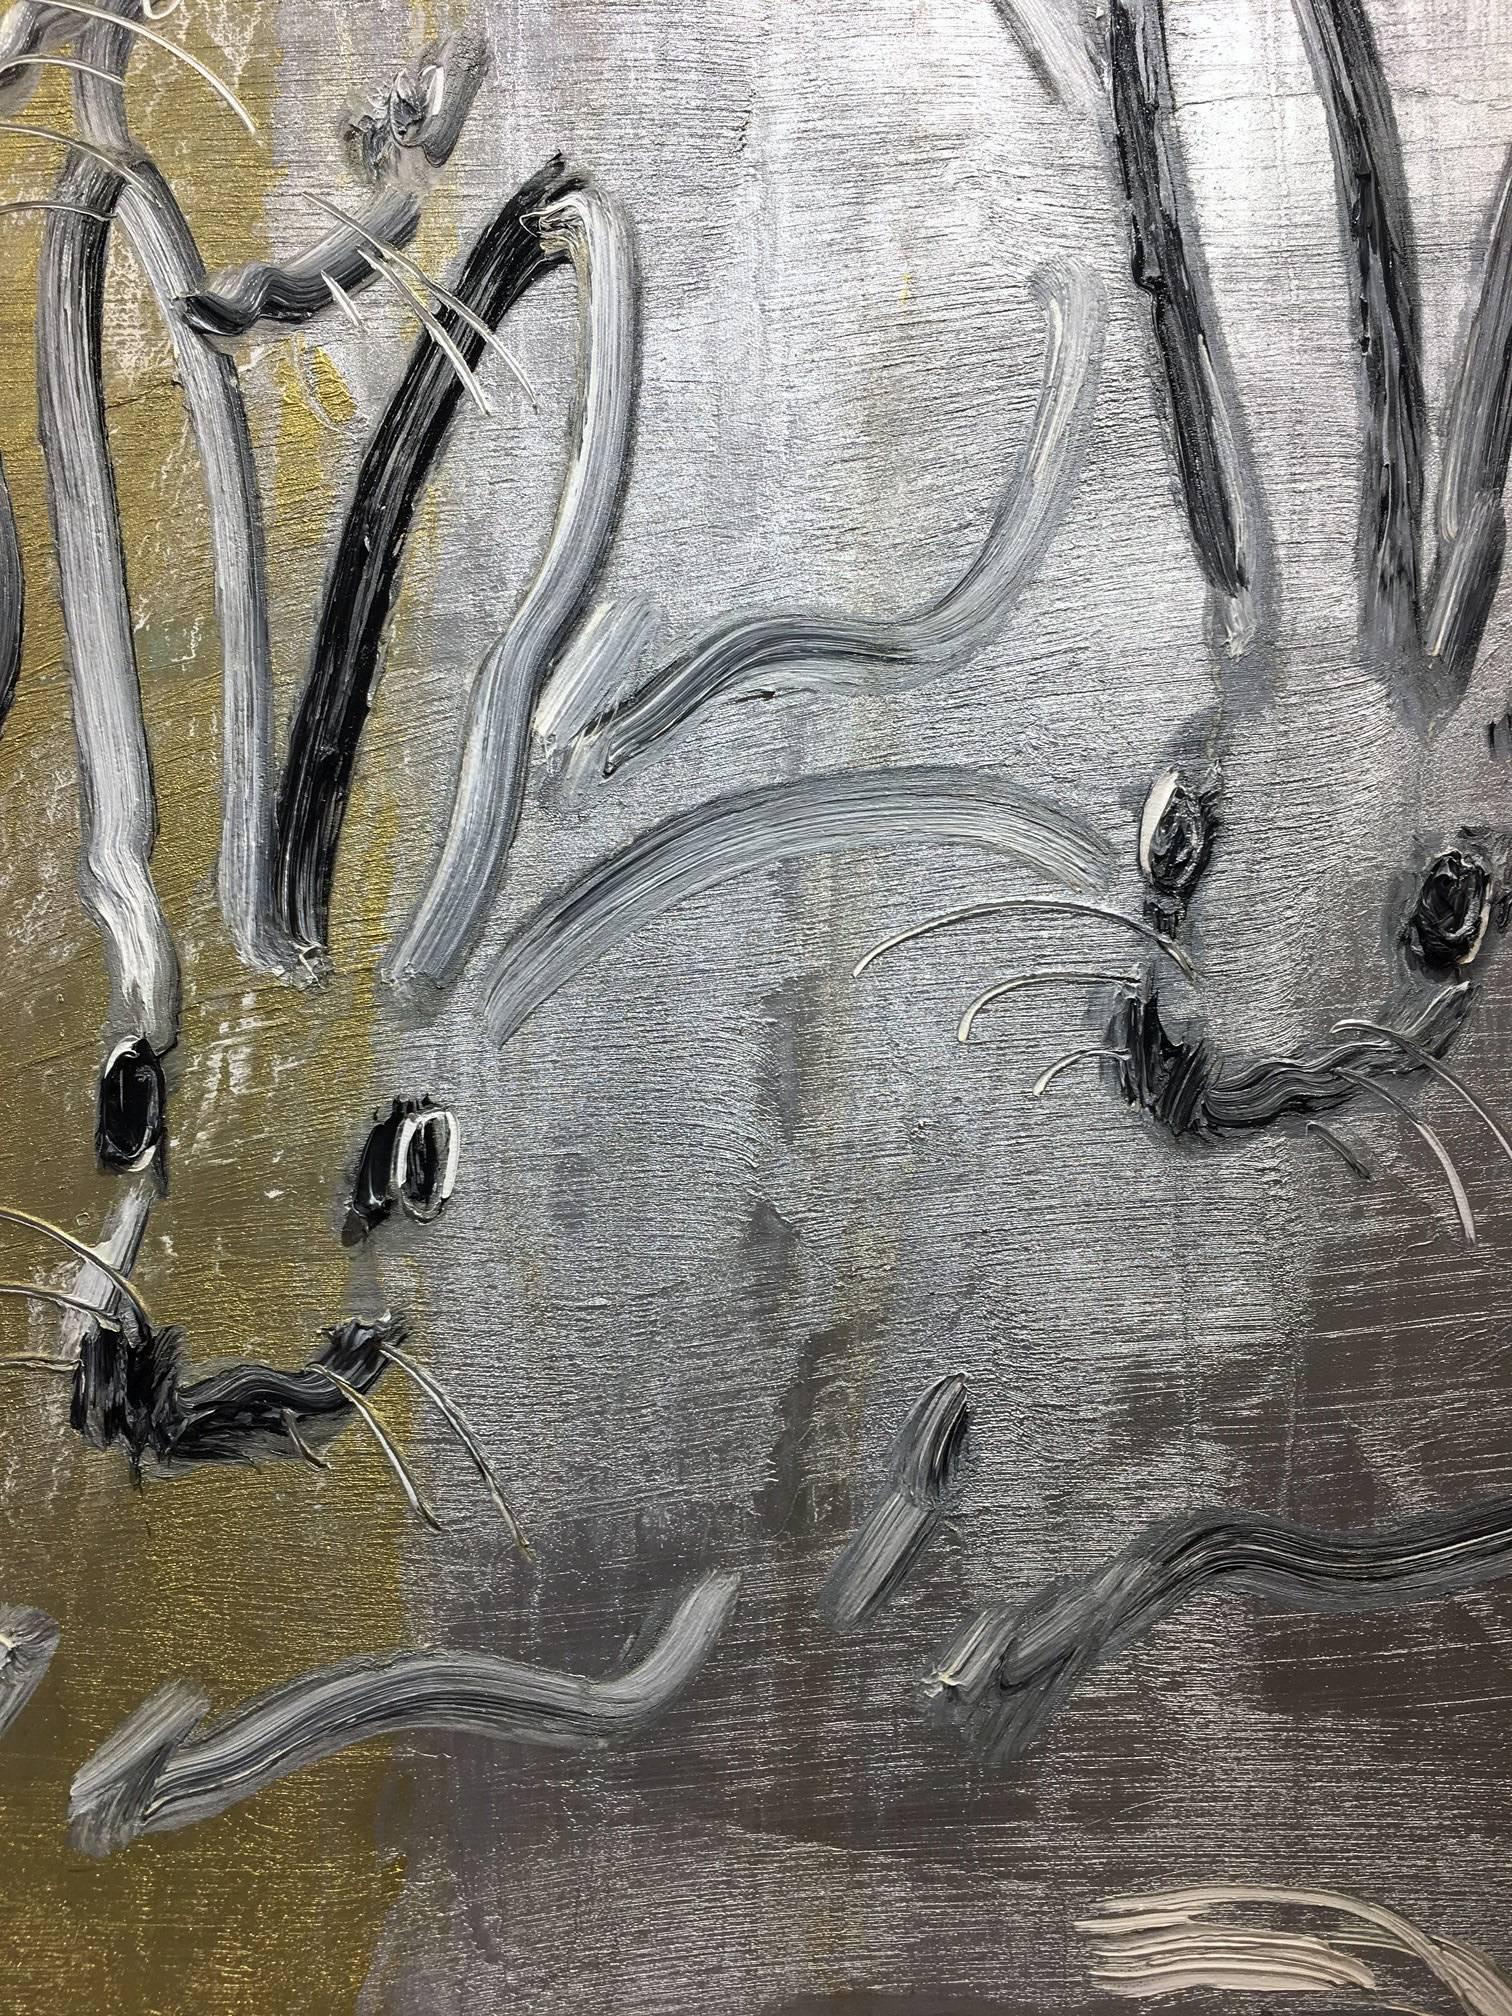 Artist:  Slonem, Hunt
Title:  Silver & Gold
Series:  Bunnies
Date:  2015
Medium:  Oil on canvas 
Unframed Dimensions:  48